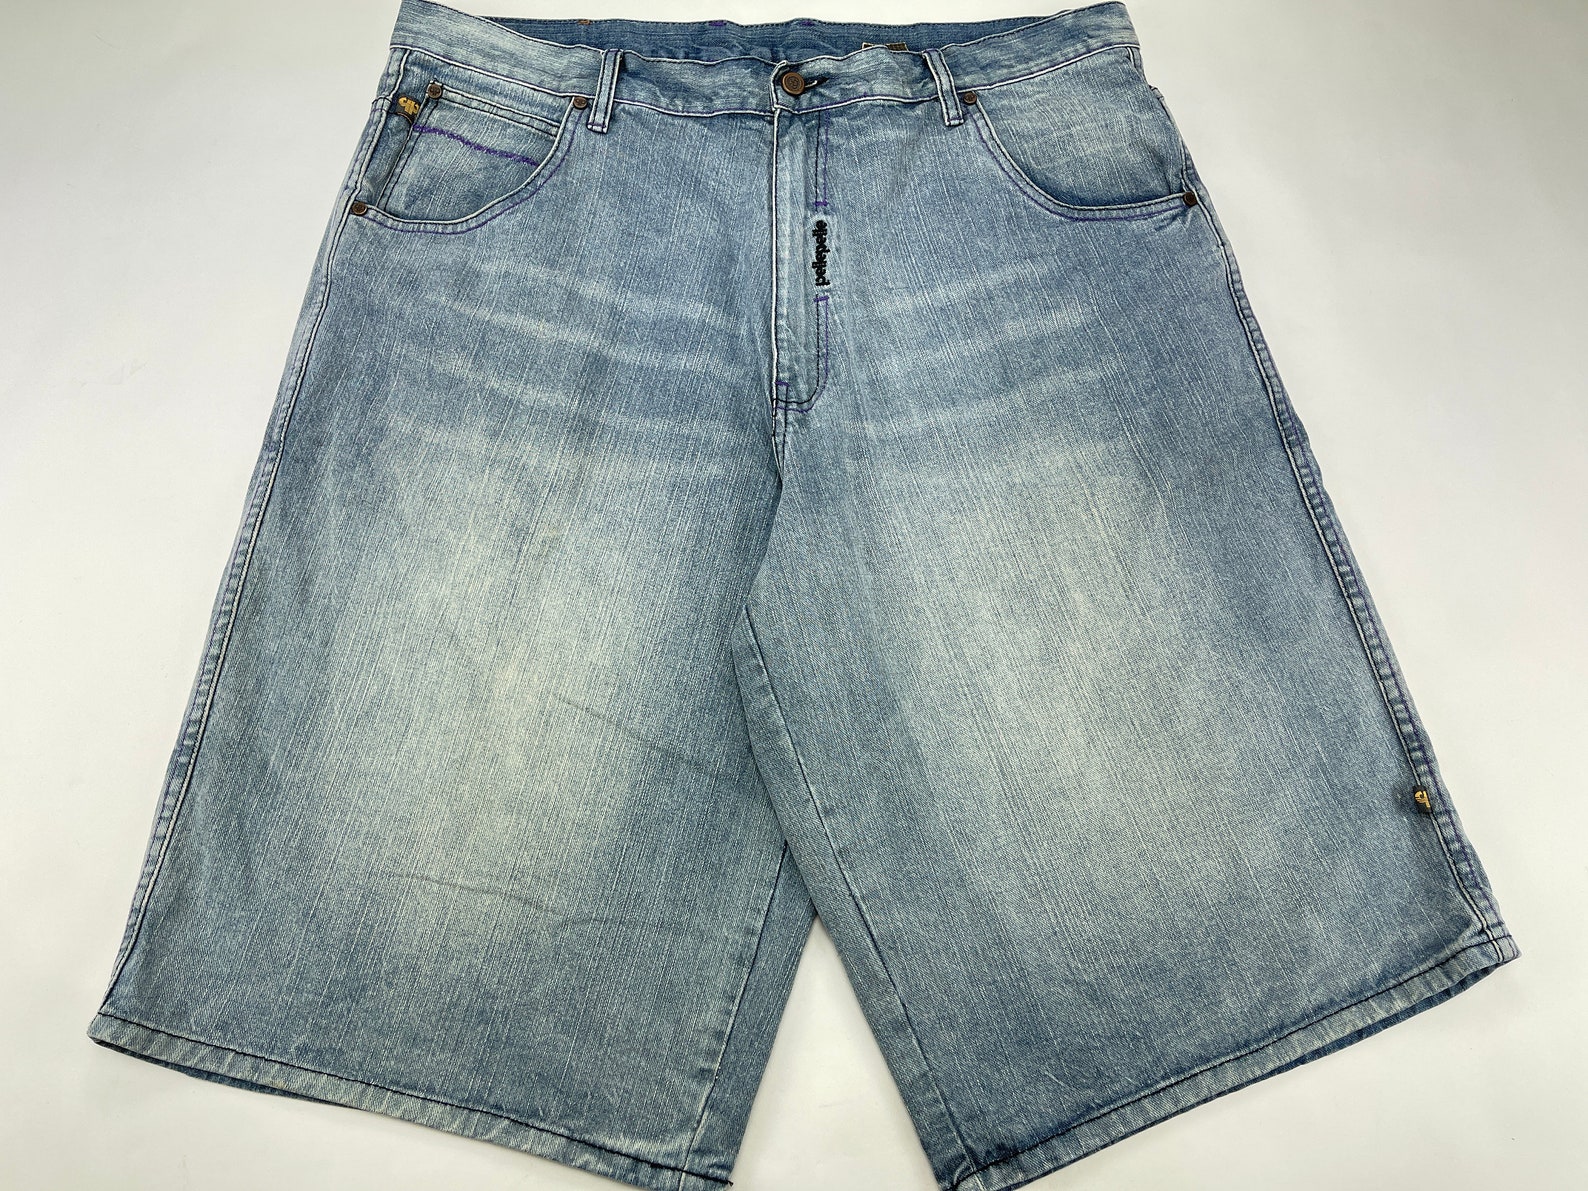 PELLE PELLE jeans shorts light blue vintage Marc Buchanan | Etsy